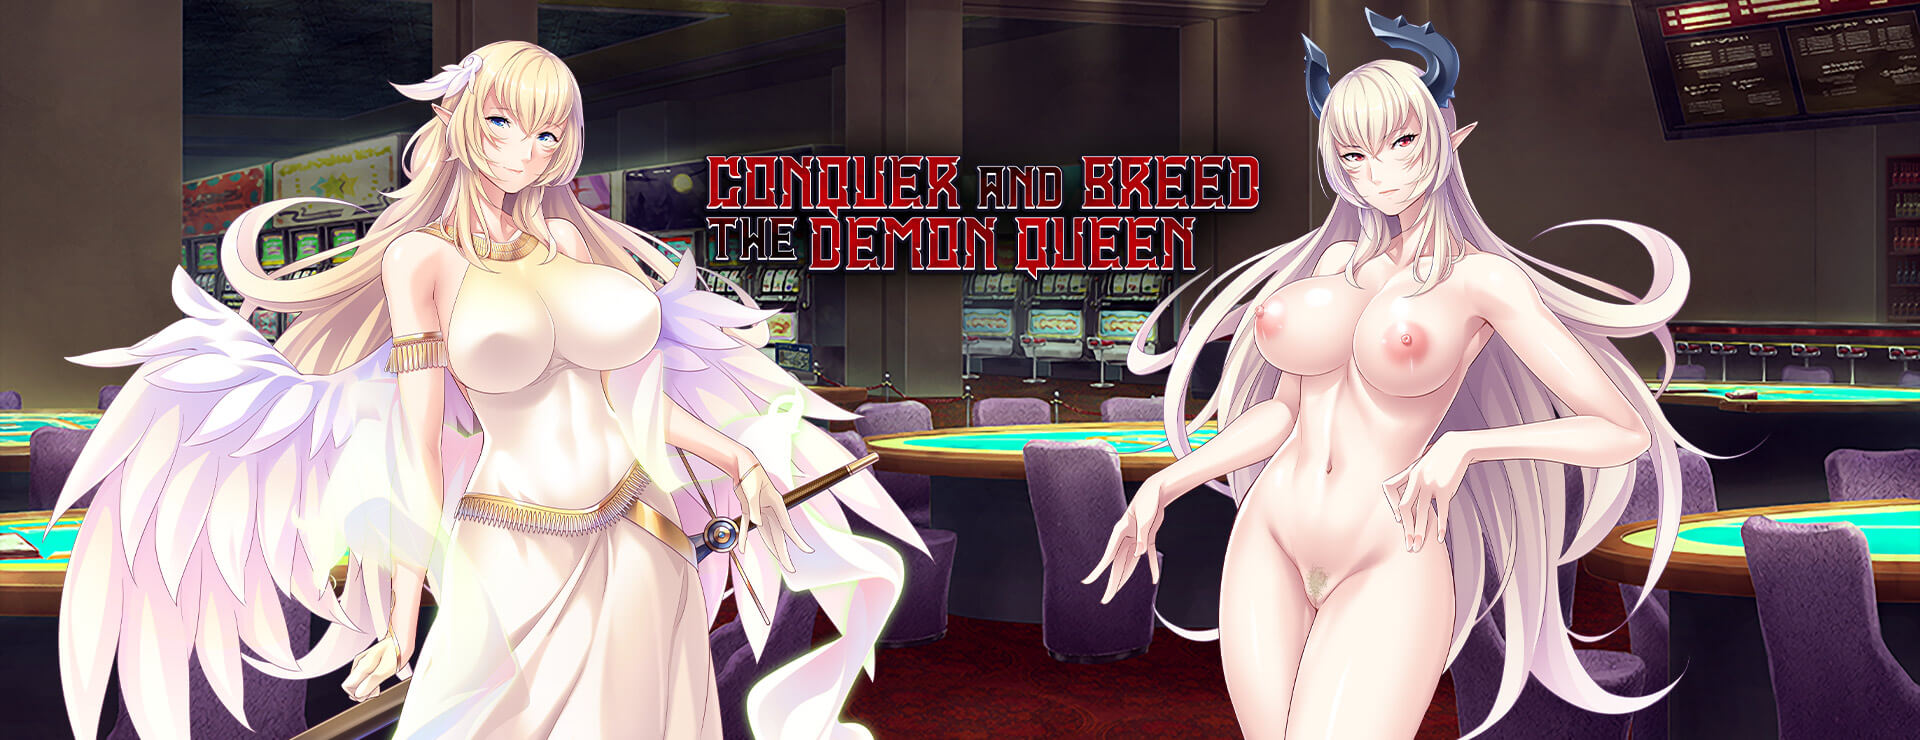 Conquer and Breed the Demon Queen - Japanisches Adventure Spiel